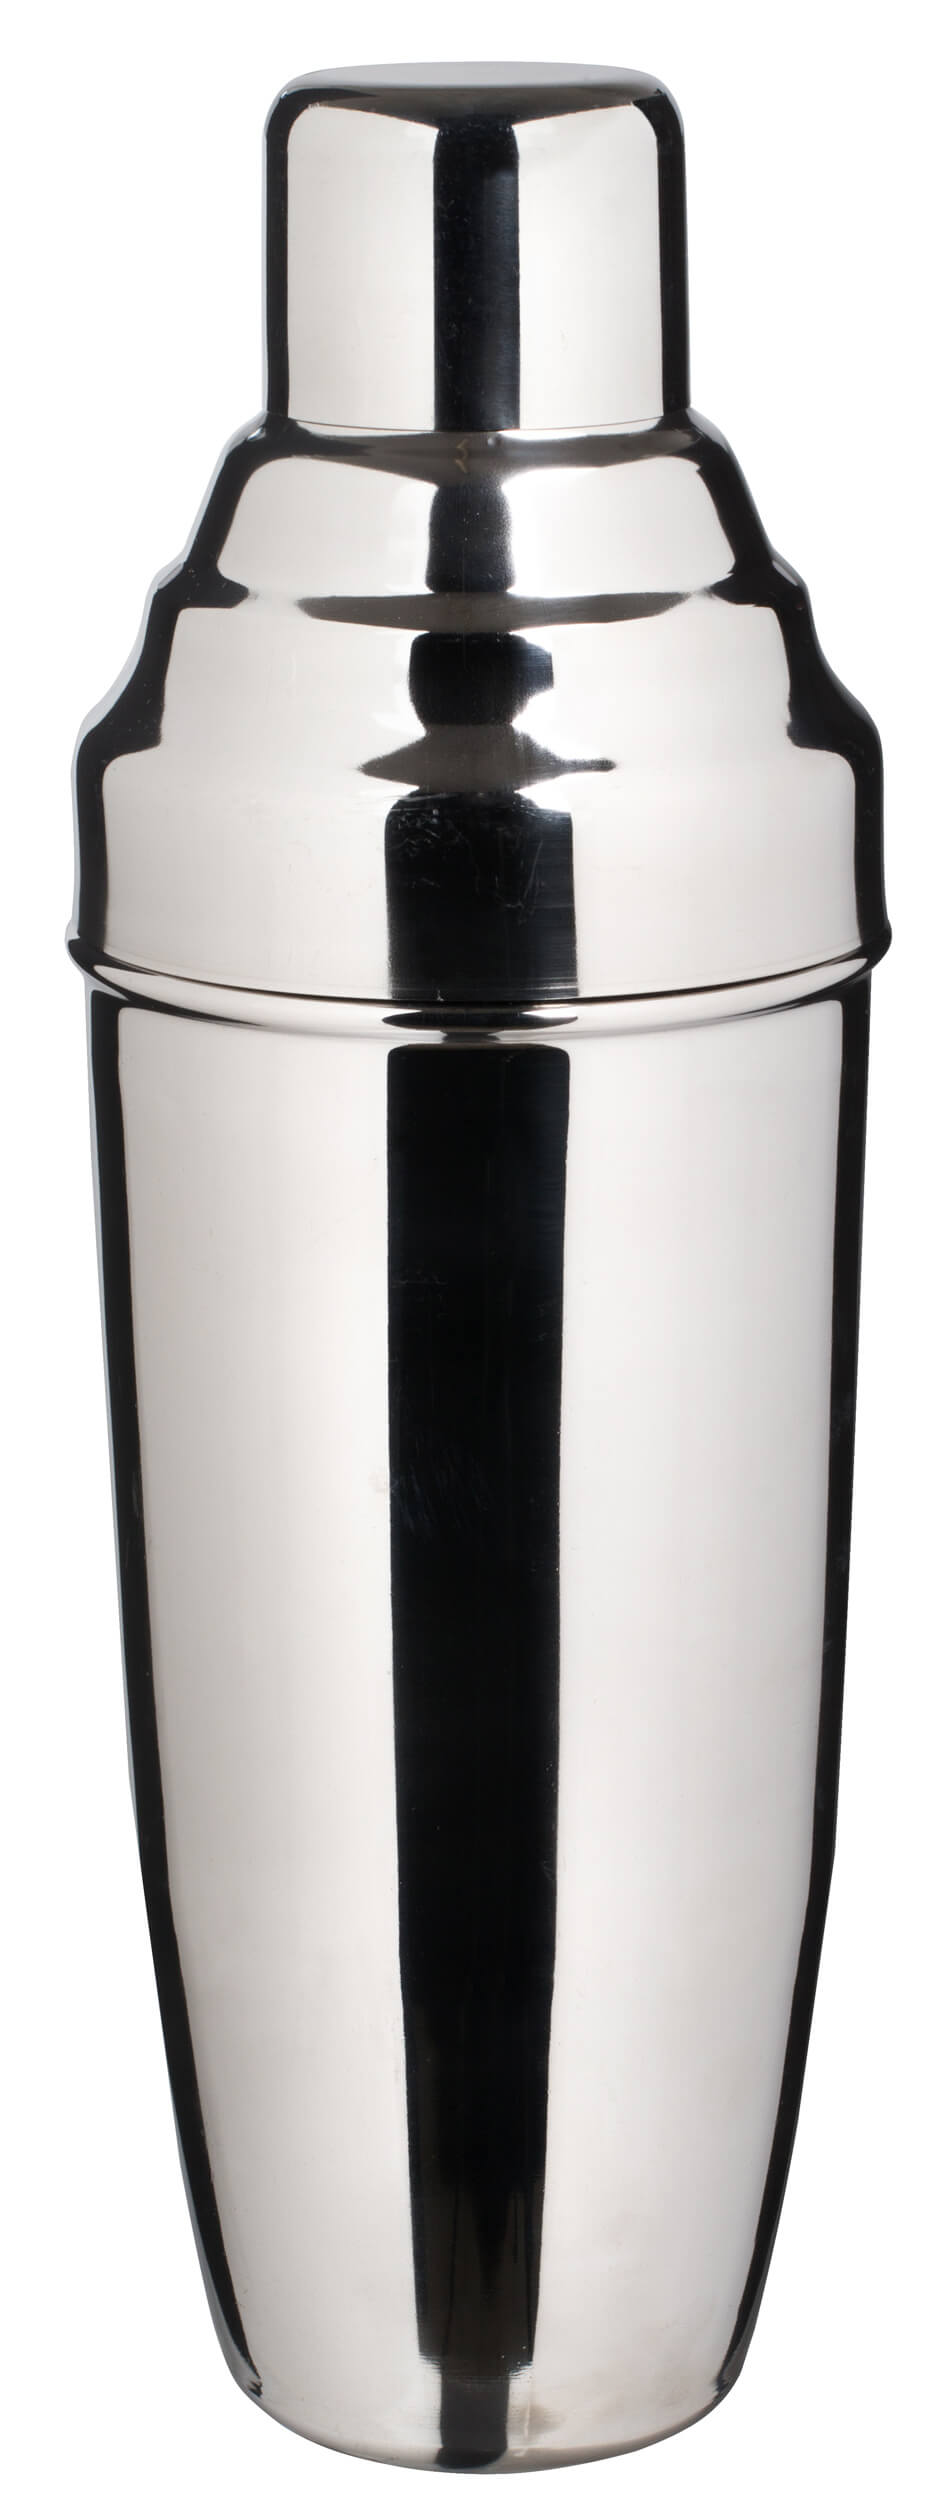 Cocktail Shaker, Edelstahl, dreiteilig, poliert - 2000ml